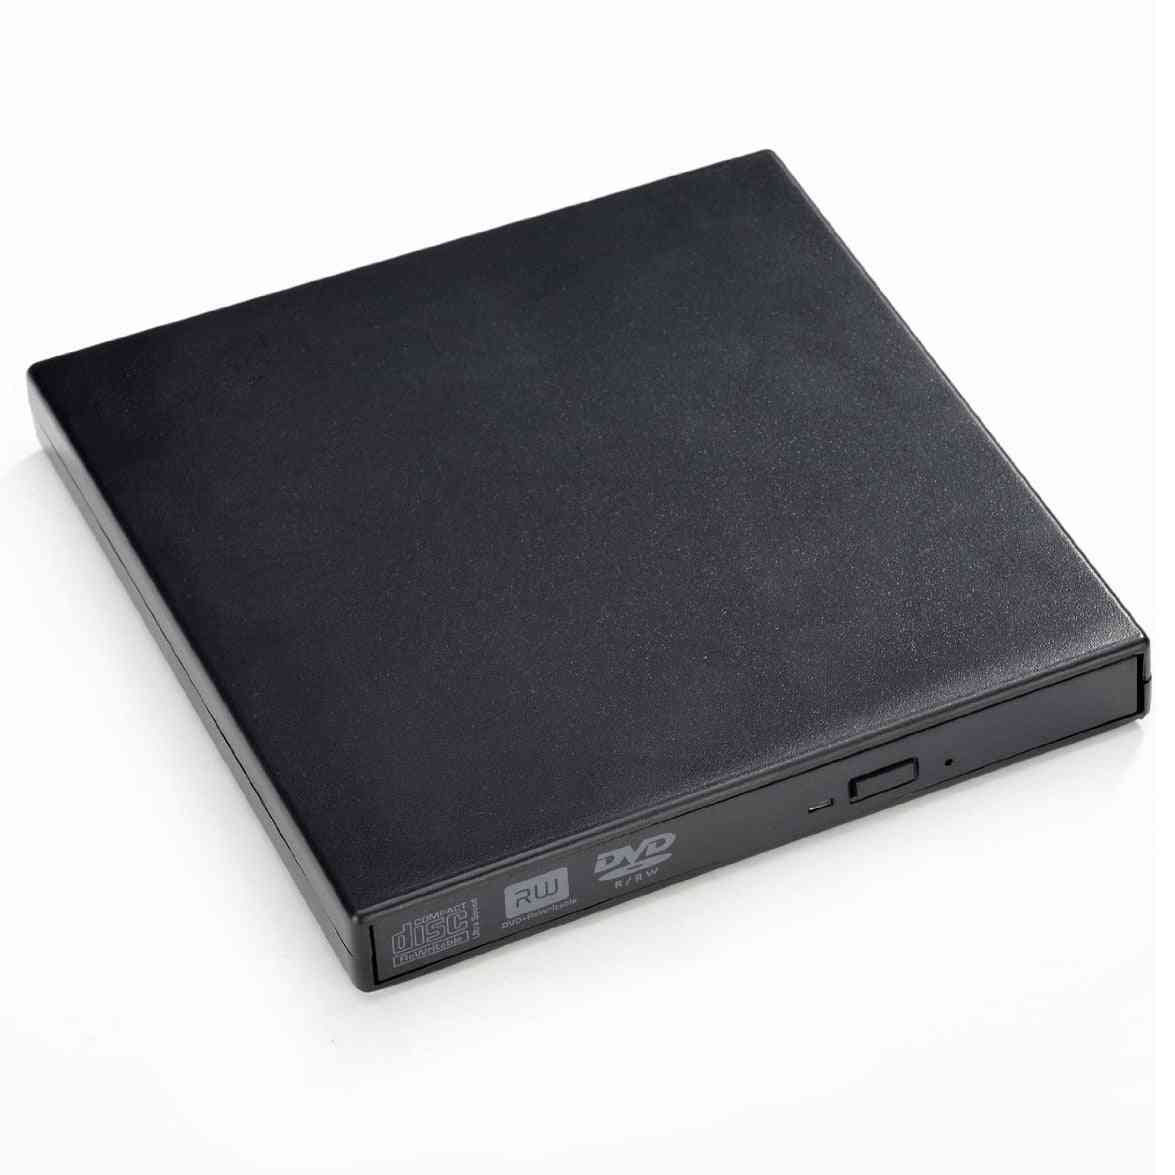 Portable Slim External Usb Dvdrom Burner Writer Optical Drive For Laptop/notebook/pc